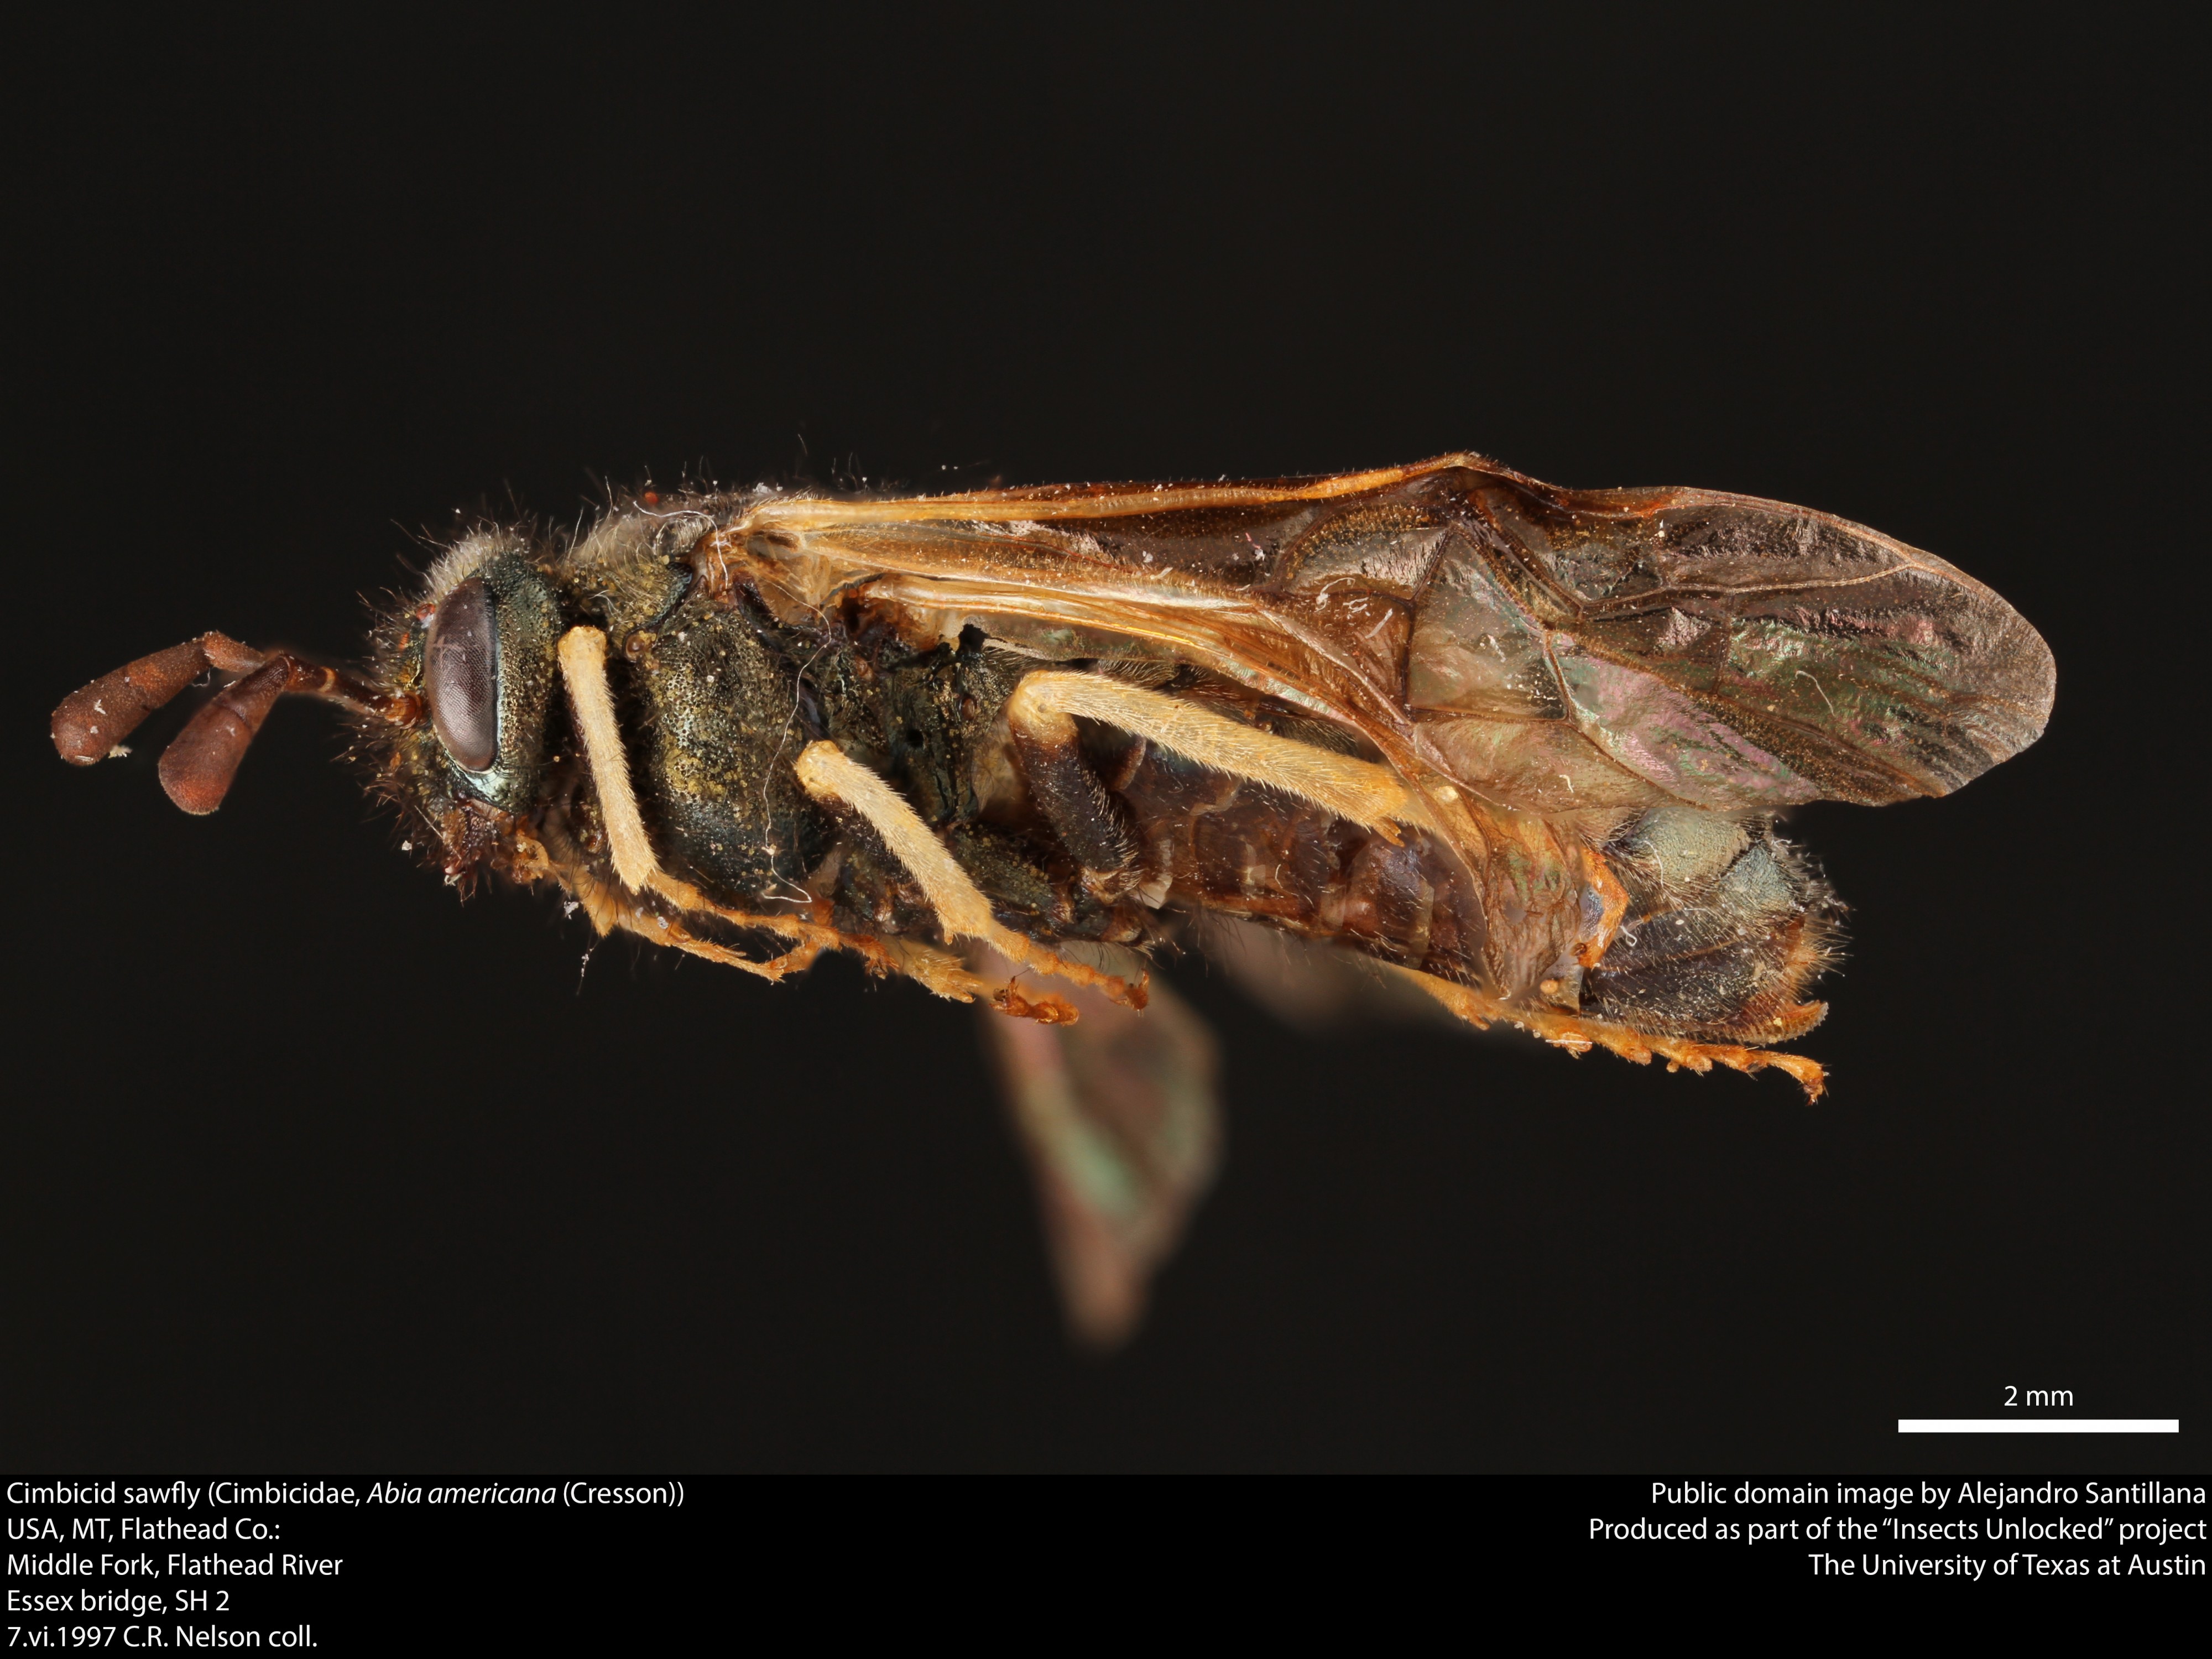 Cimbicid sawfly (Cimbicidae, Abia americana (Cresson)) (37765990112)